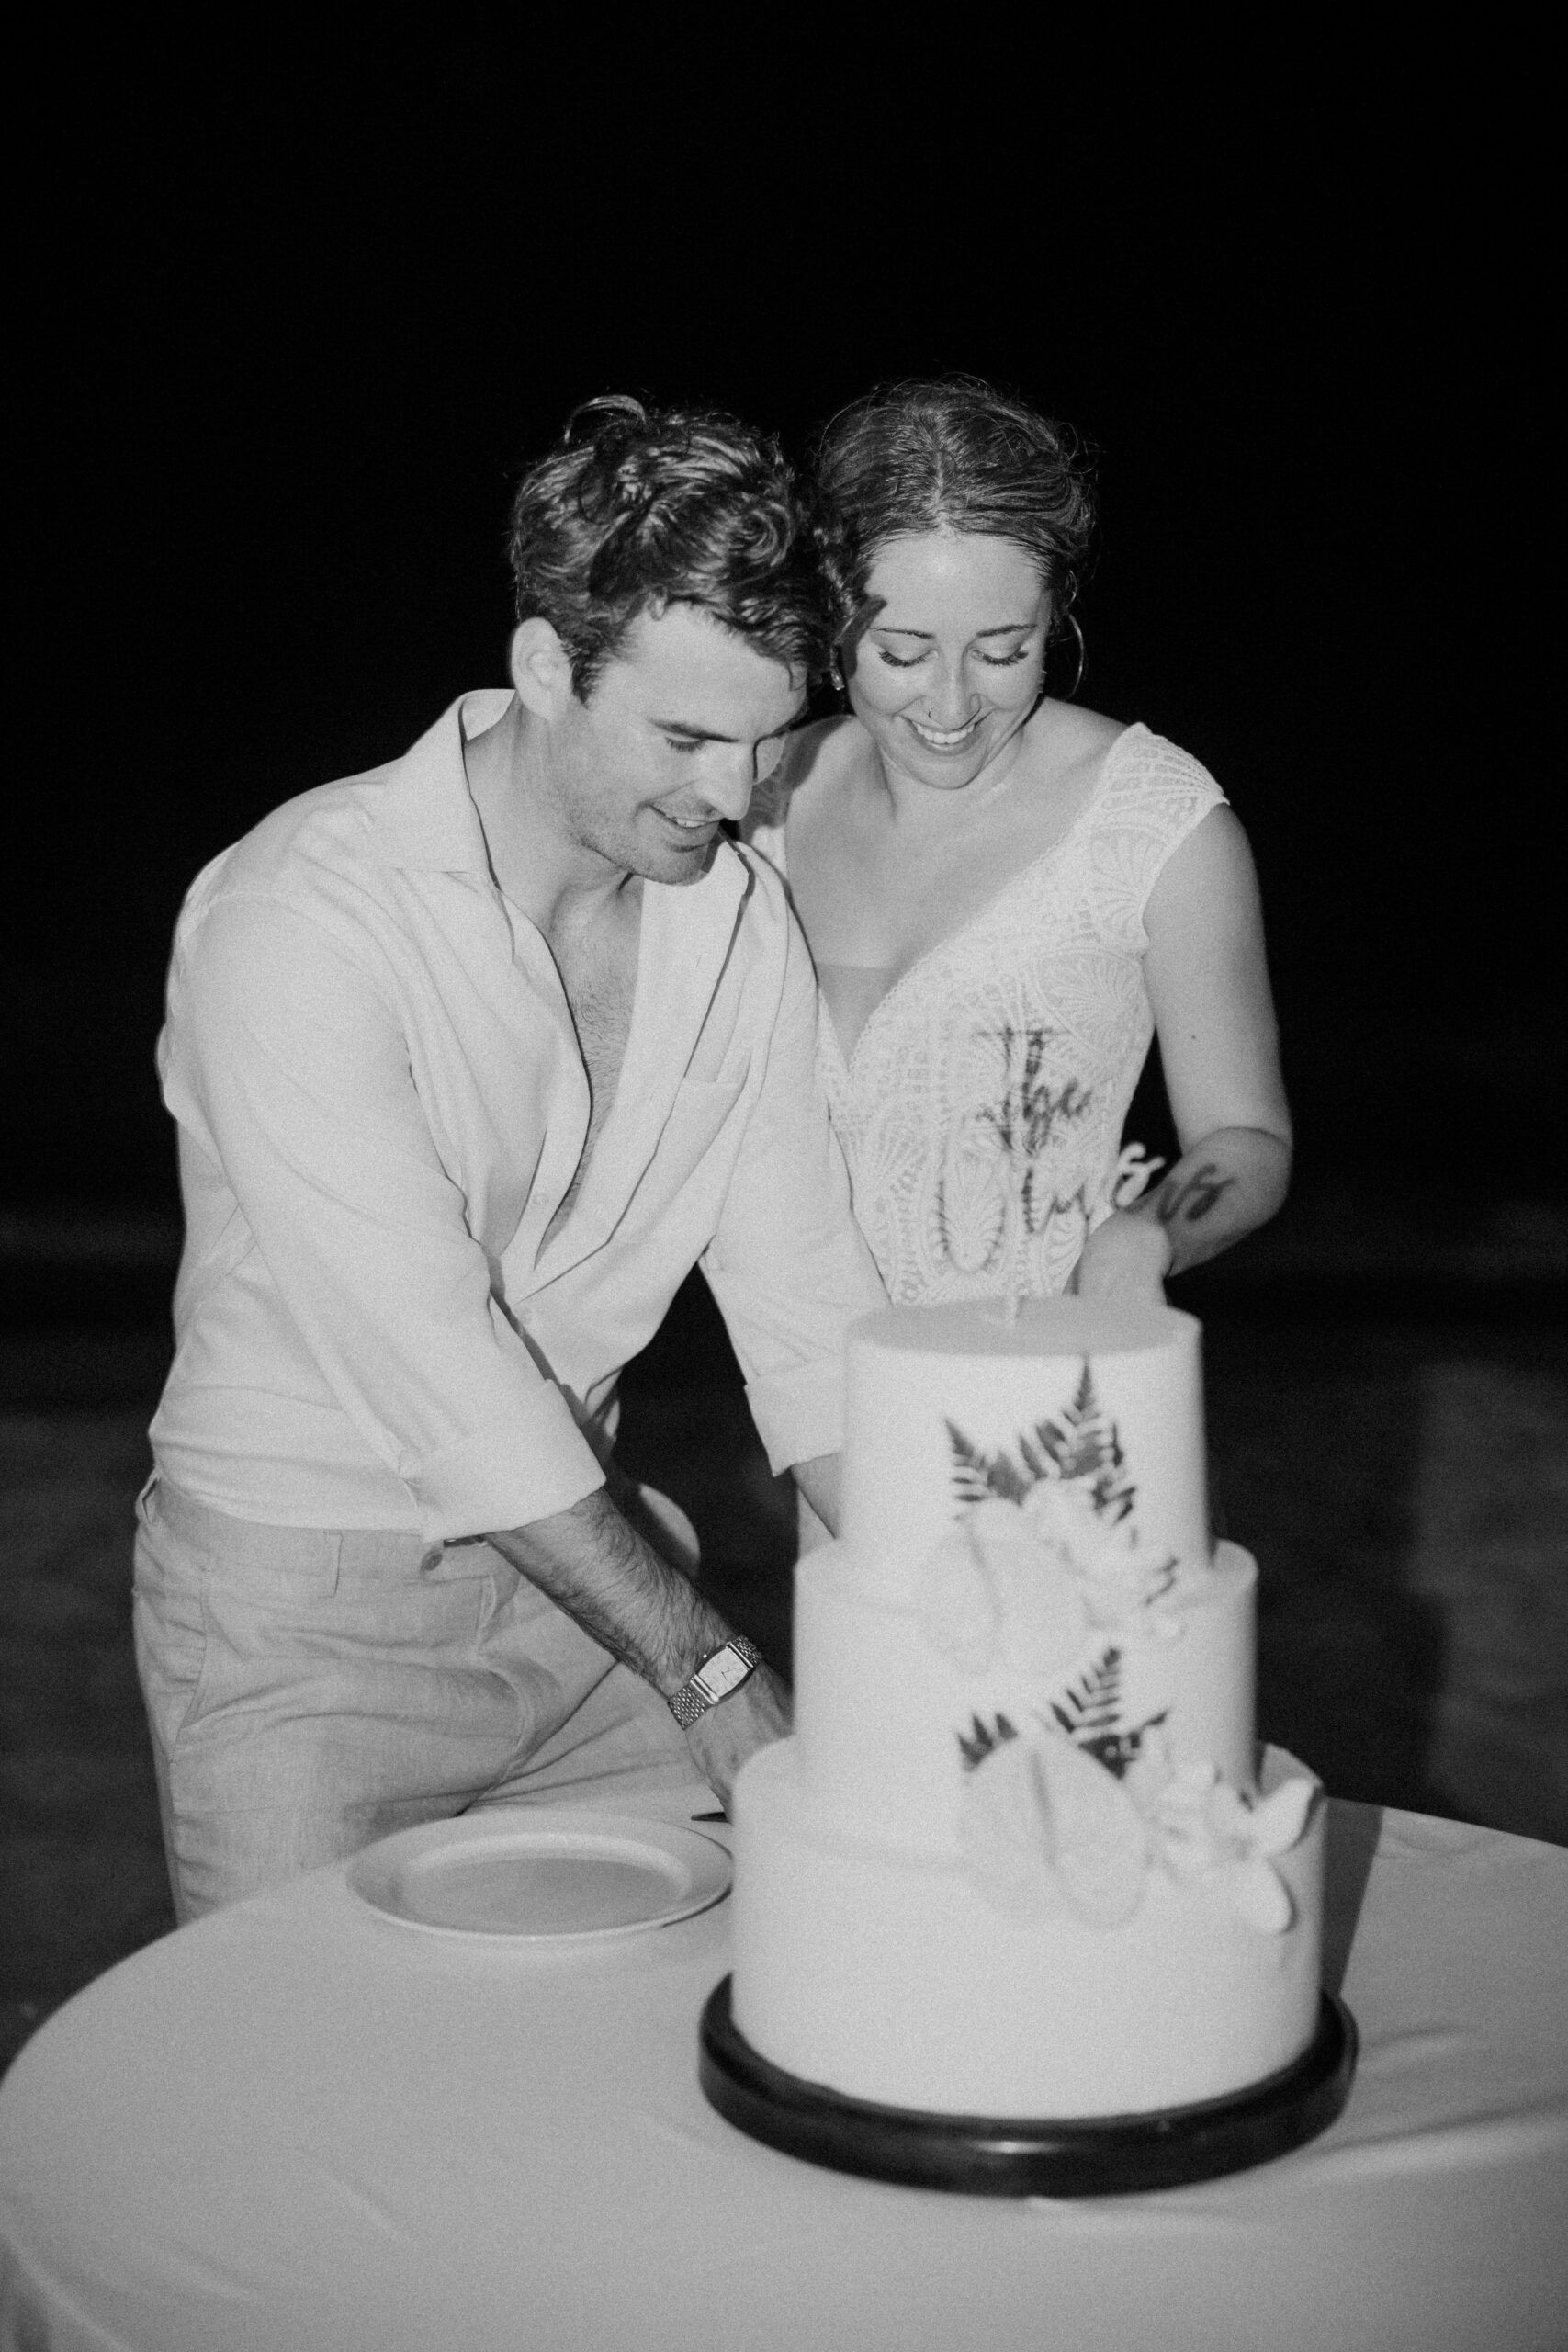 groom cutting wedding cake with bride.